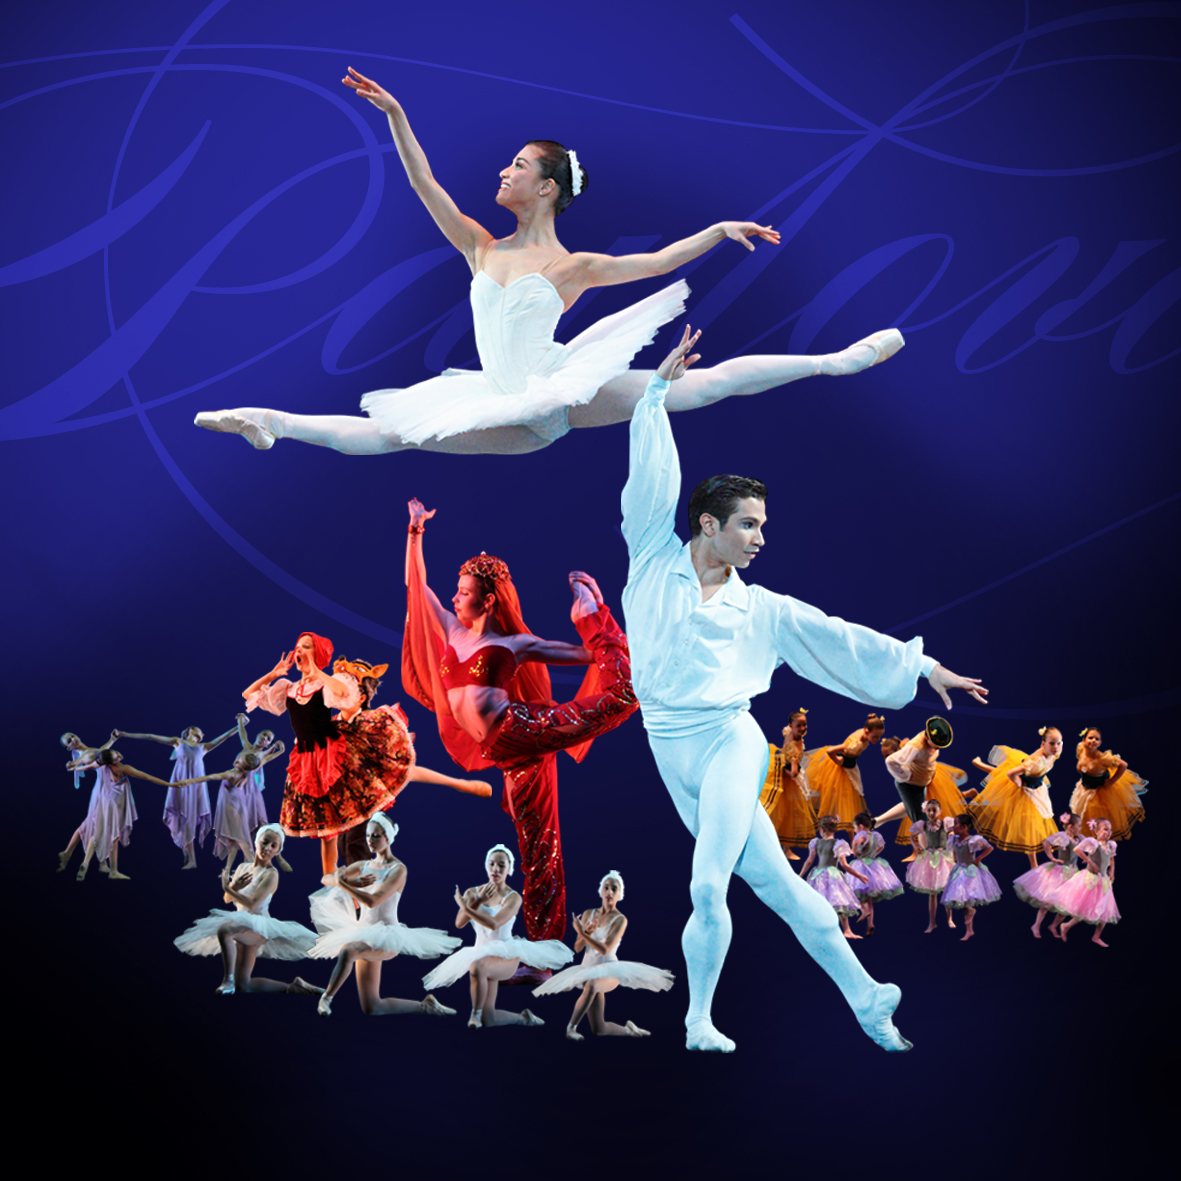 ballet dancers from concert poster